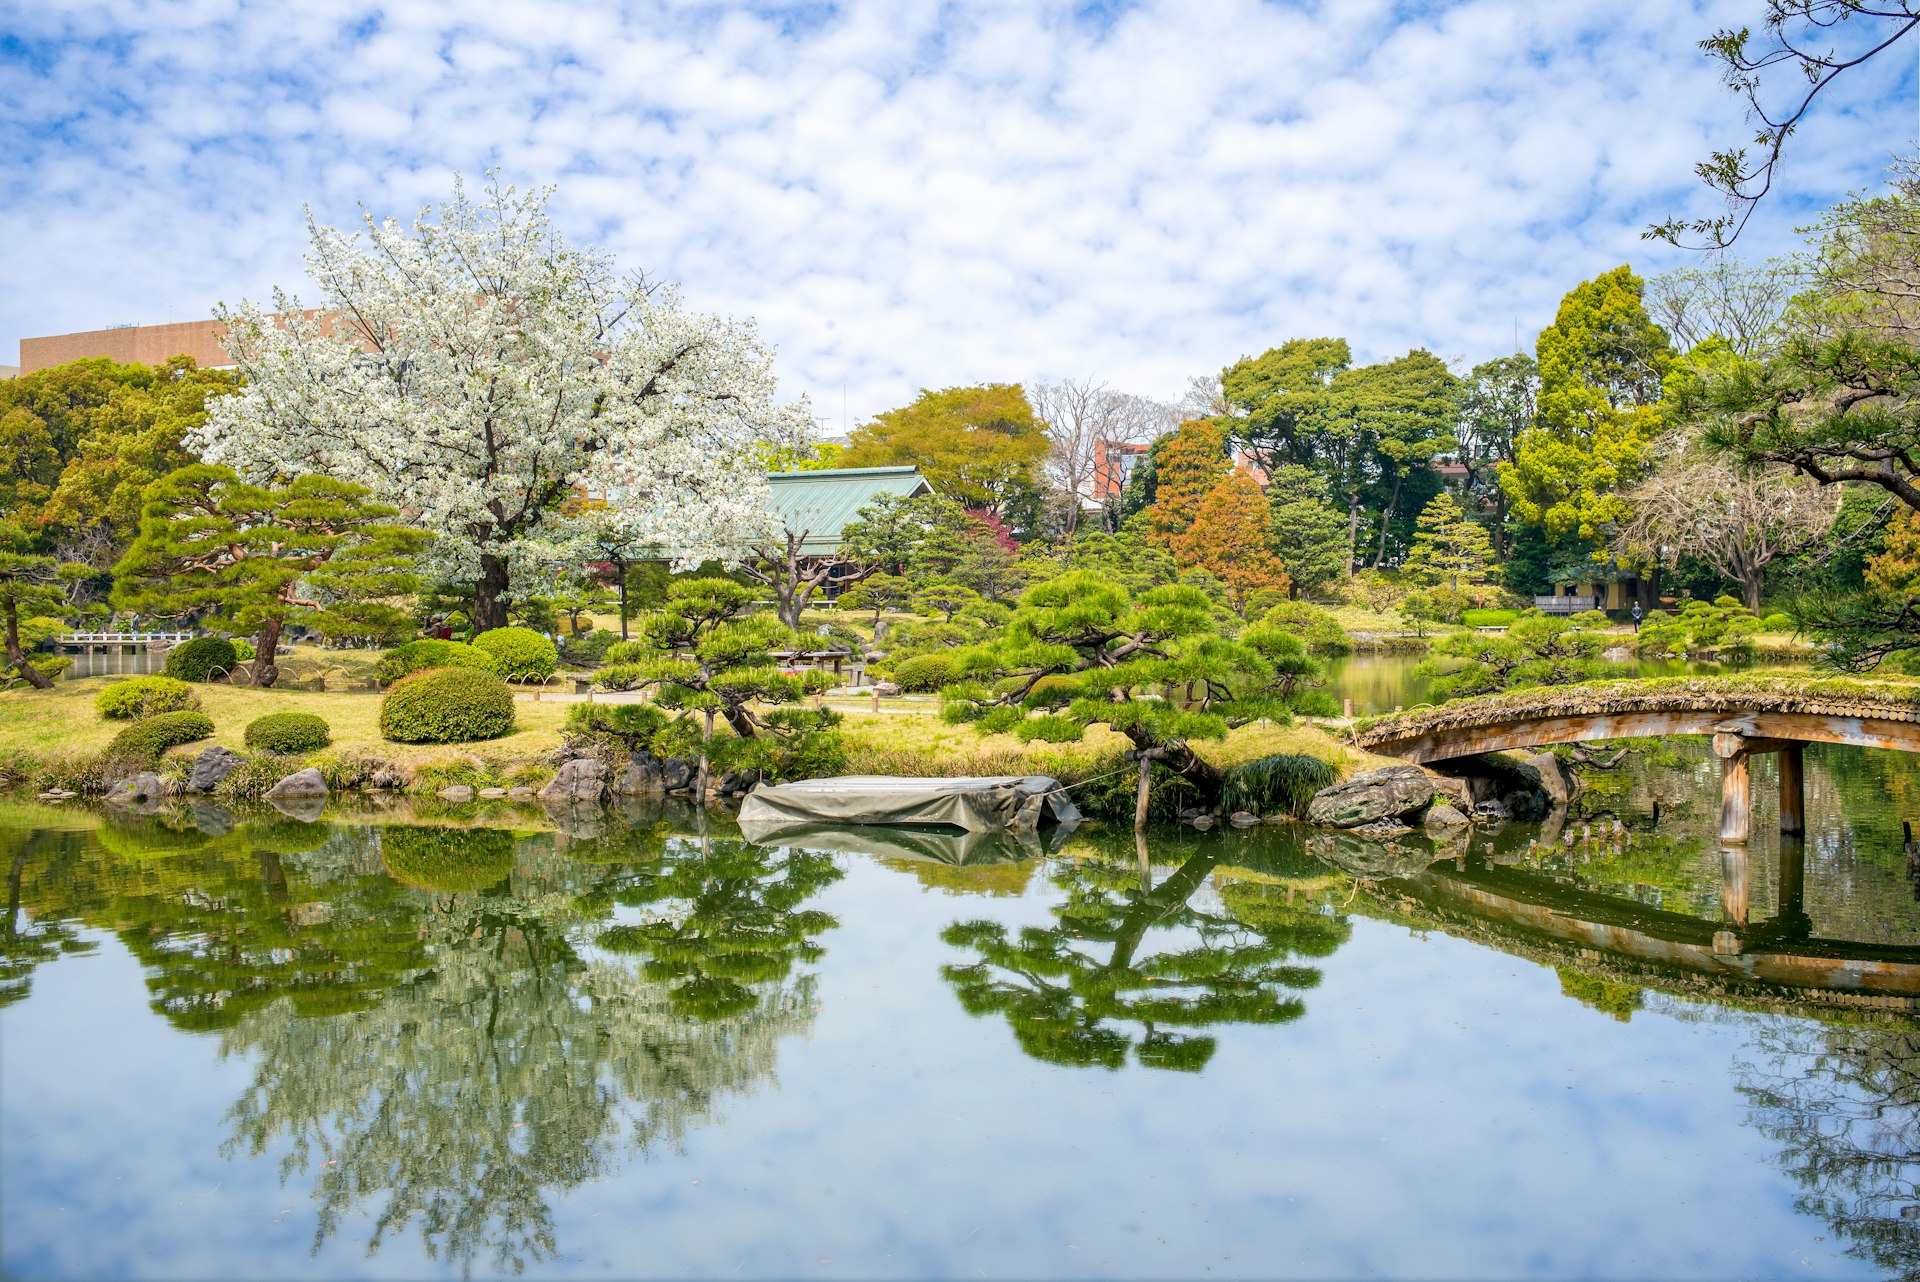 Trees surround a peaceful pond at Kiyosumi Garden in Tokyo, Japan